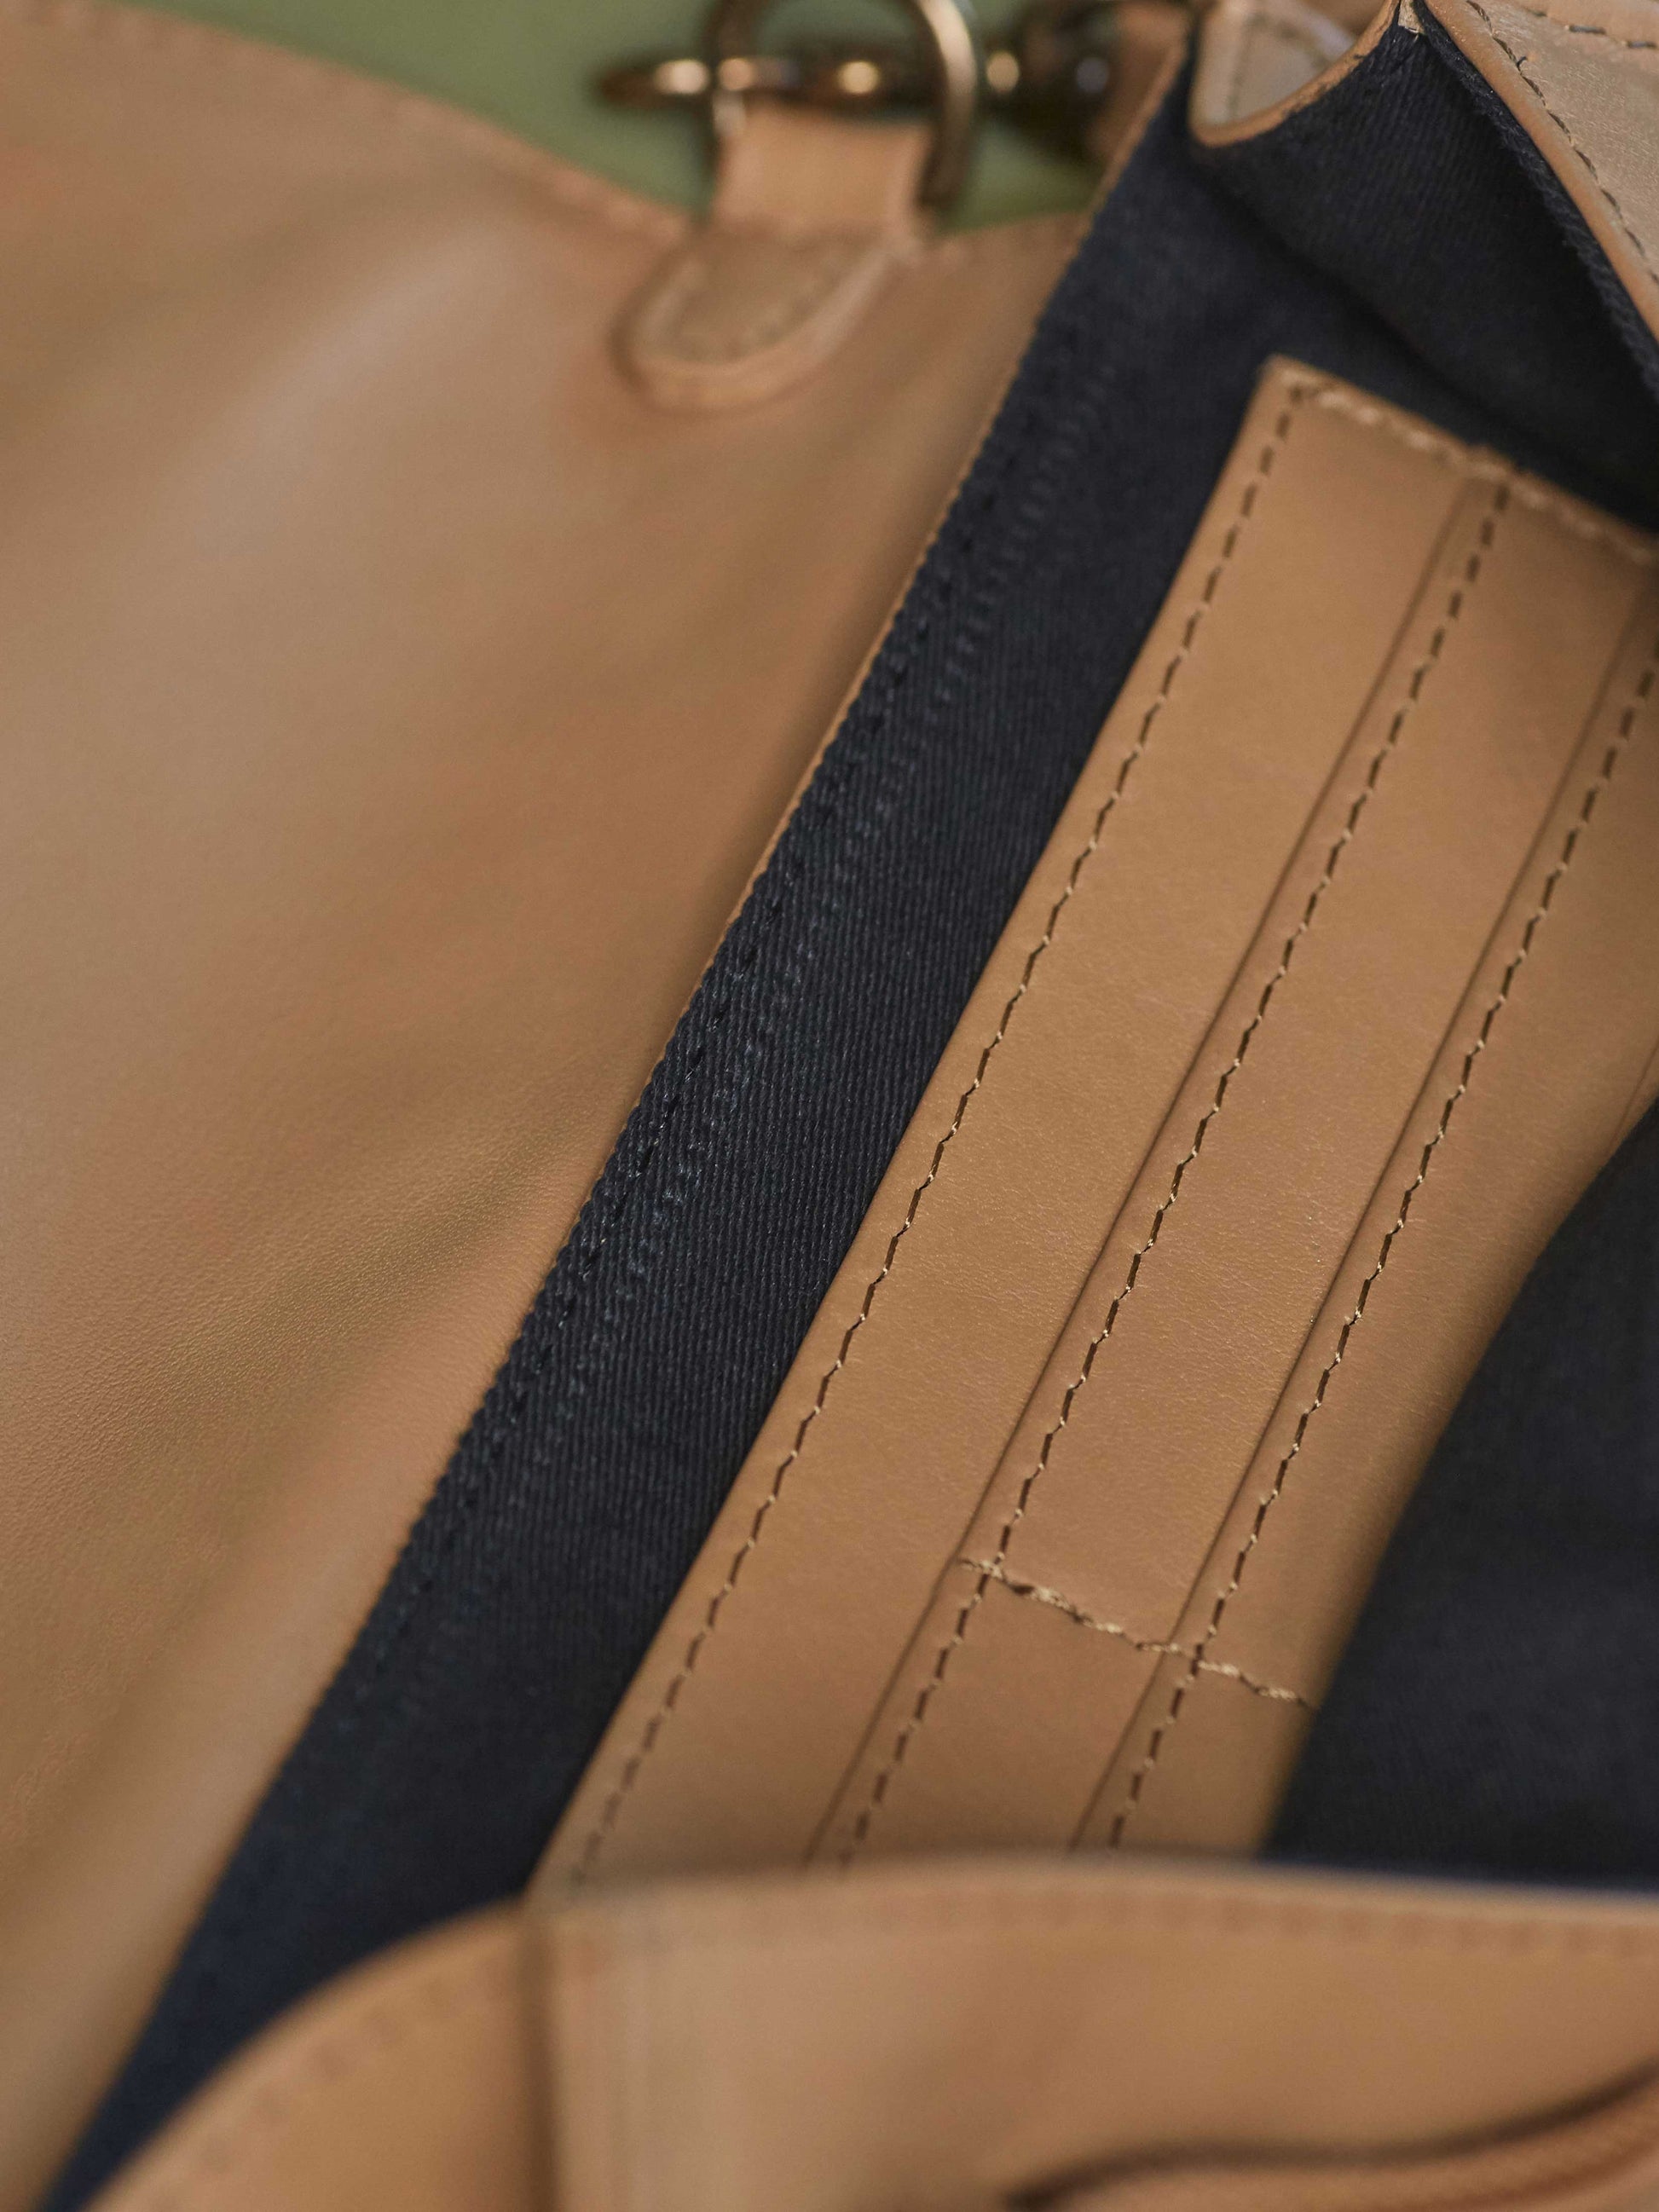 Leather-wallet crossbody bag - Wood Wallet Crossbody cappuccino color handbags by payton james Nashville leather handbag designer closeup of zipper